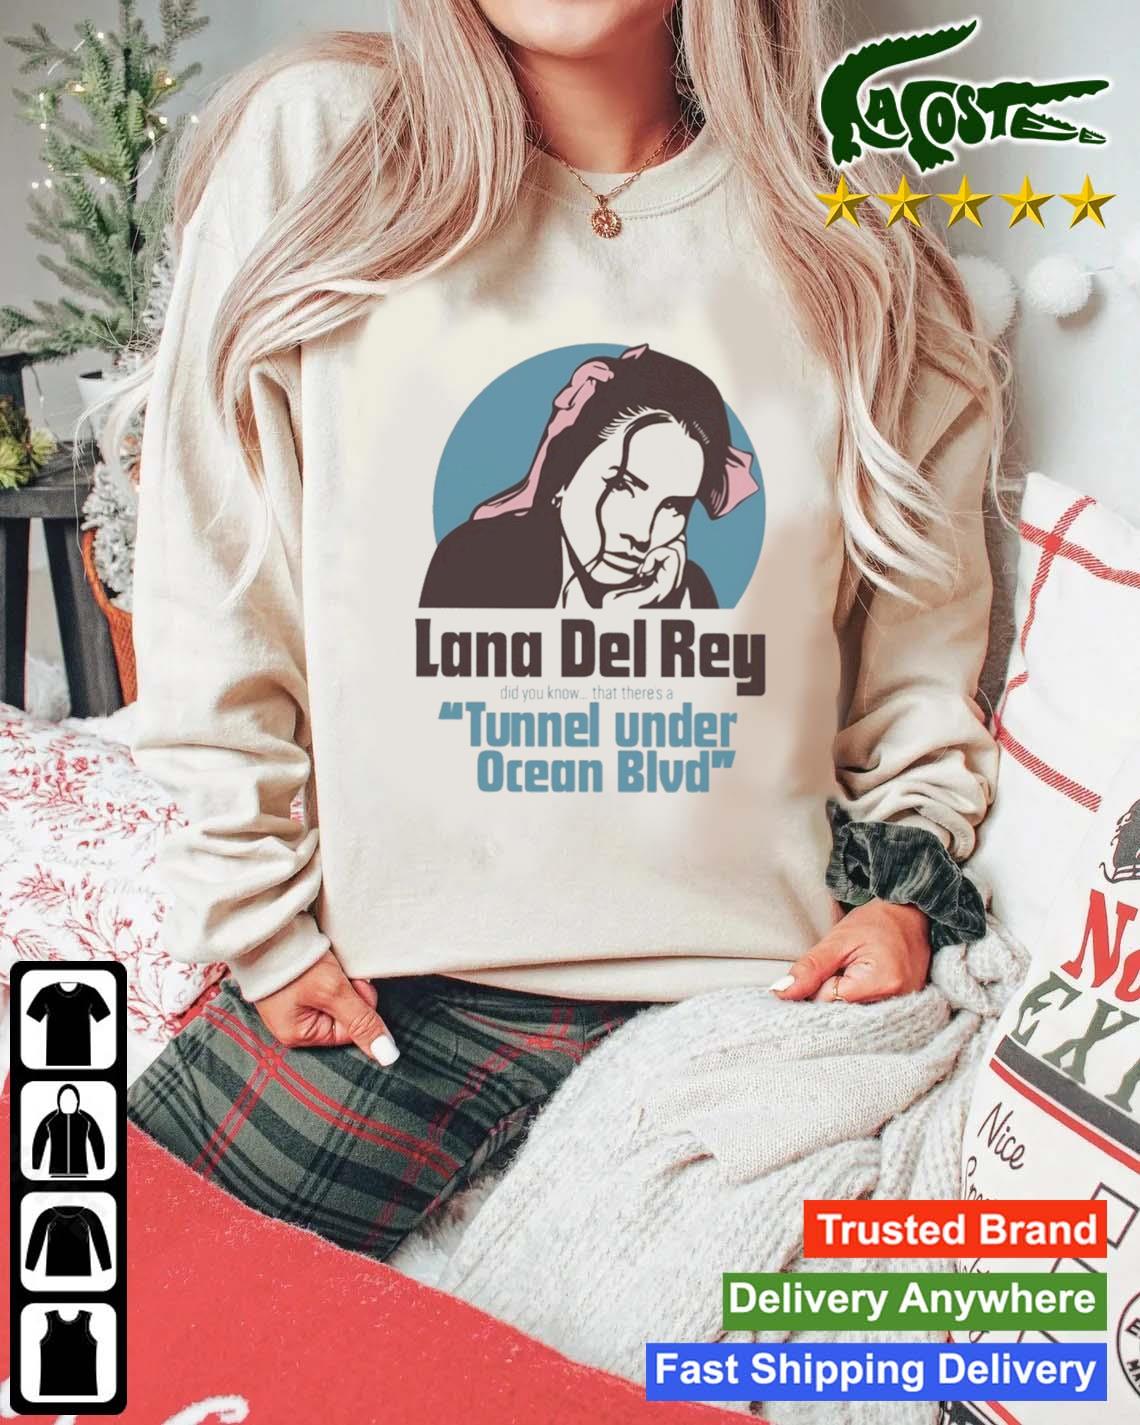 Lana Del Rey Tunnel Under Ocean Blvd Sweats Mockup Sweater